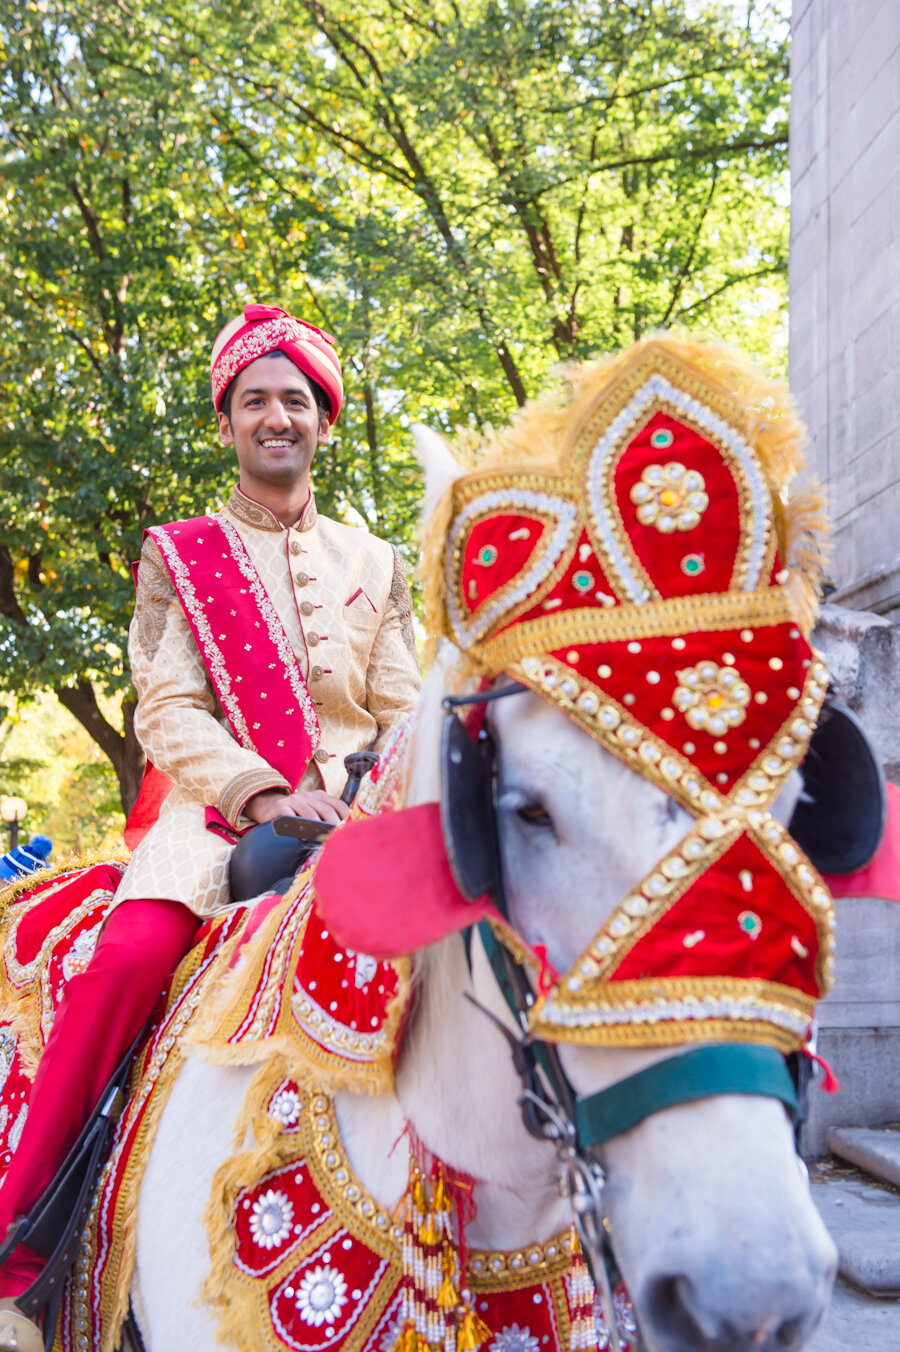 Mandarin Oriental New York wedding baraat groom on horse